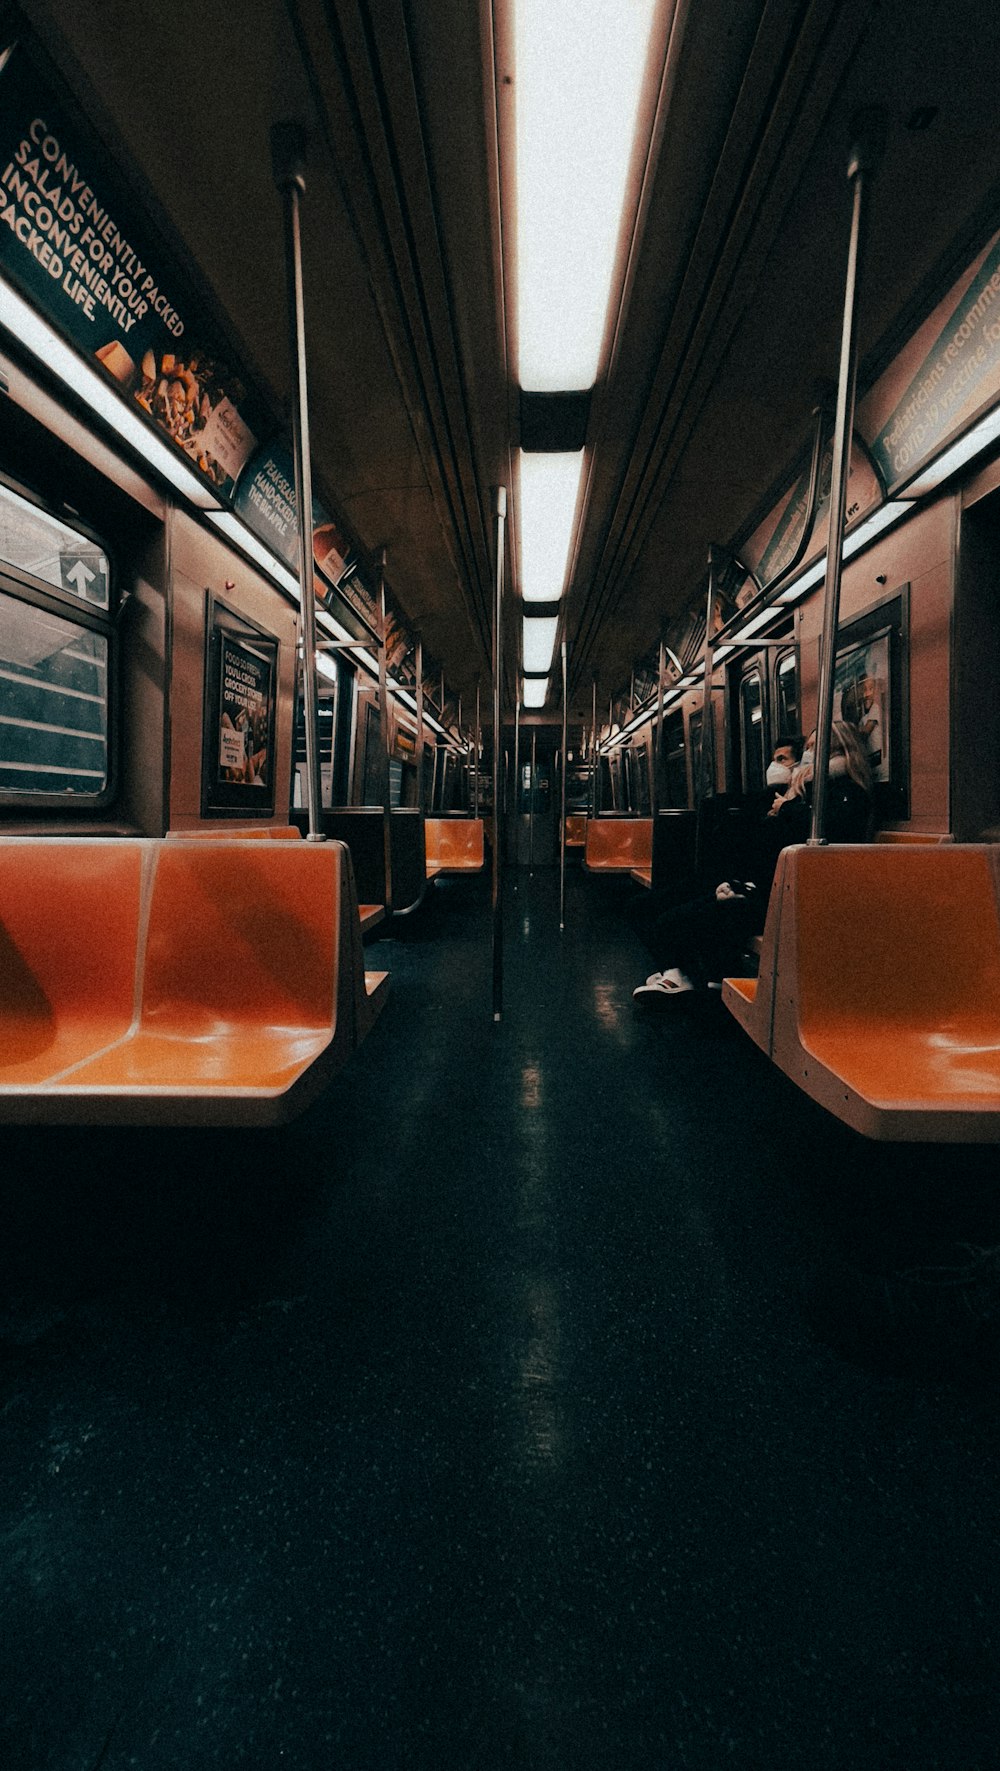 an empty subway car with orange seats